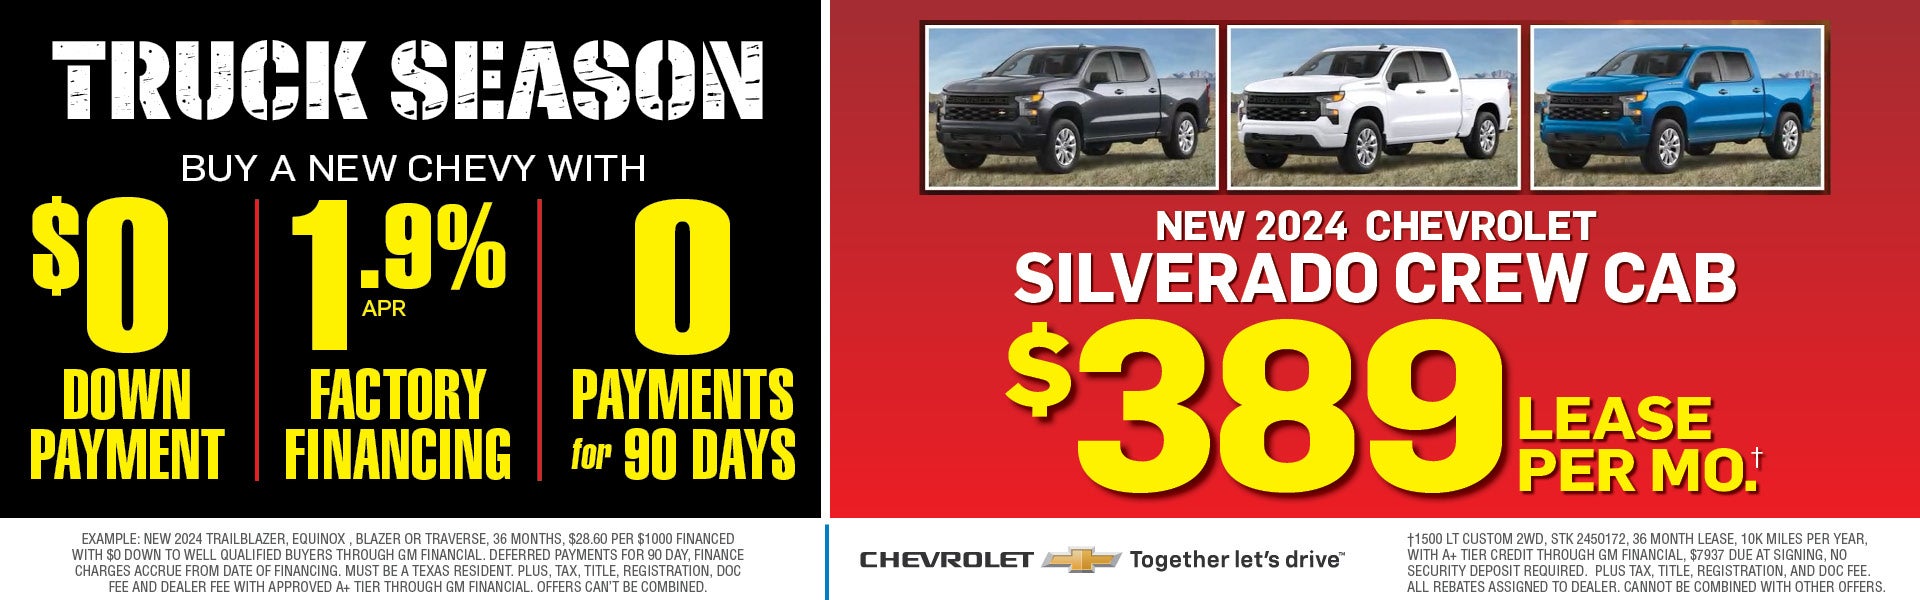 $389 lease per month 2024 Chevrolet Silverado Crew Cab